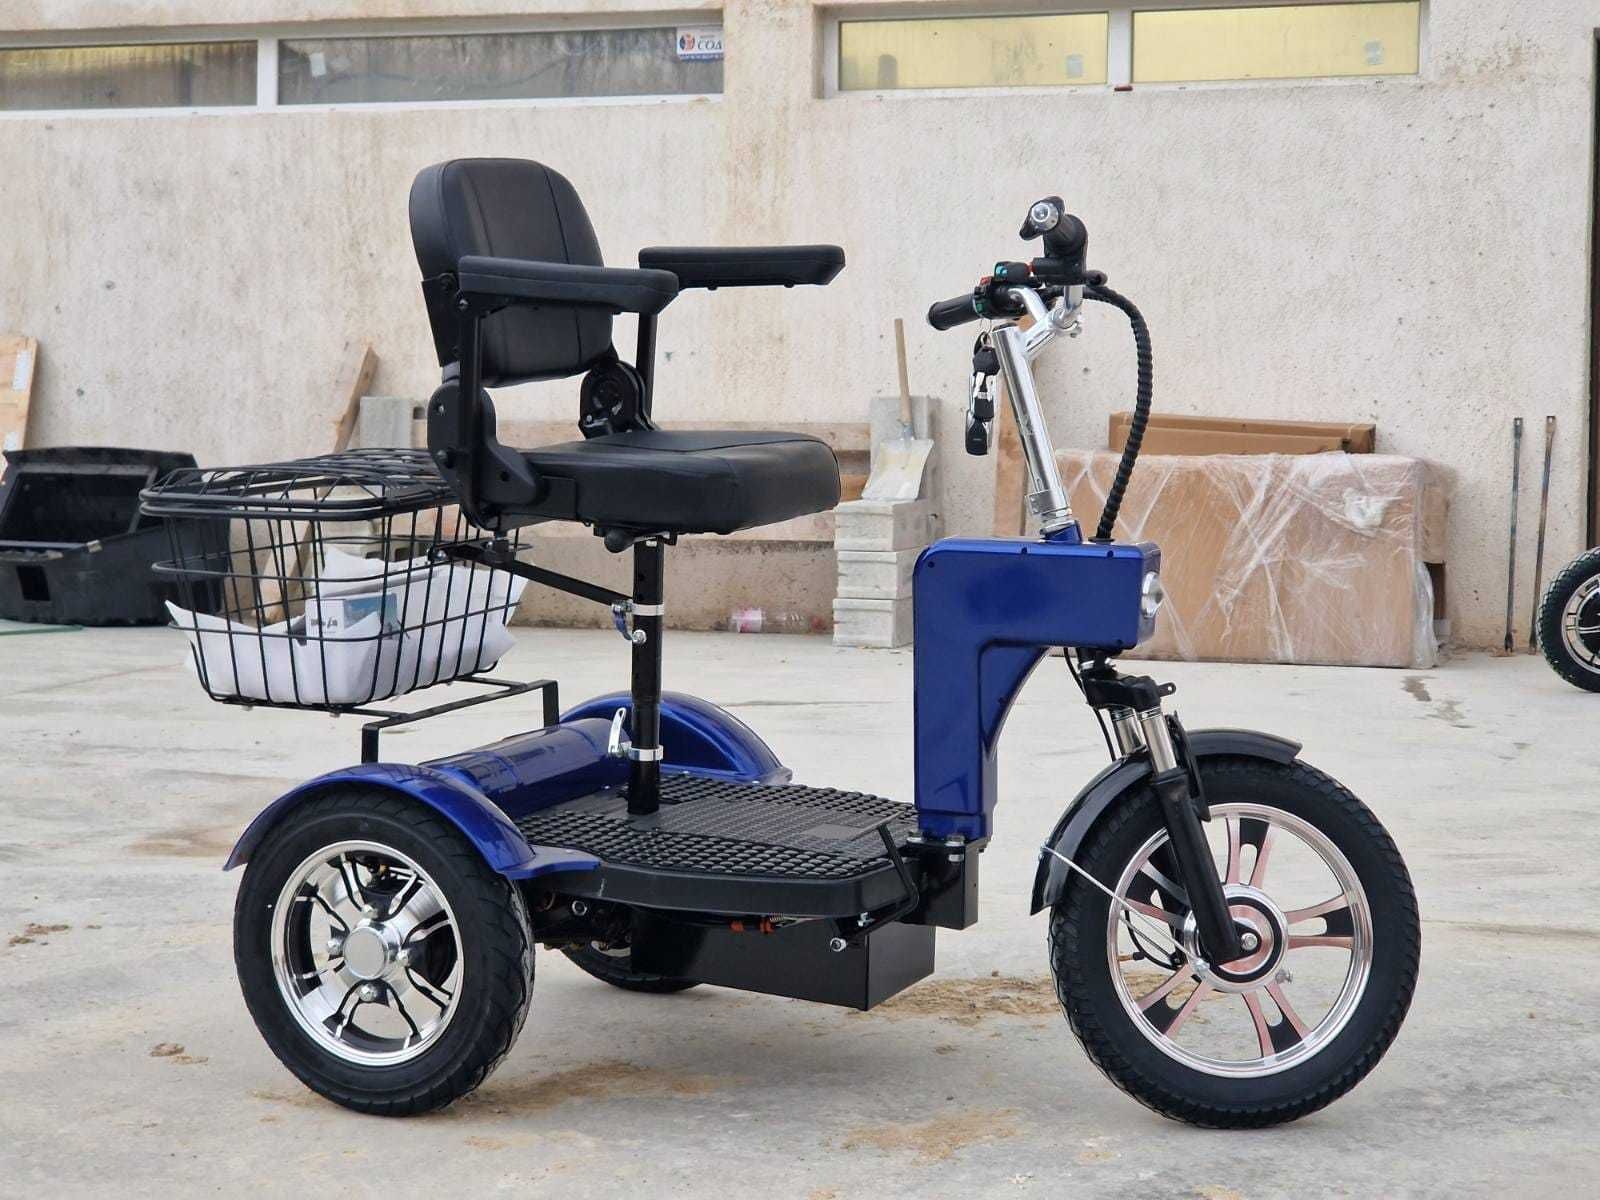 Tricicleta electrica mobilitate 500w/20ah/ FARA PERMIS -39% redus